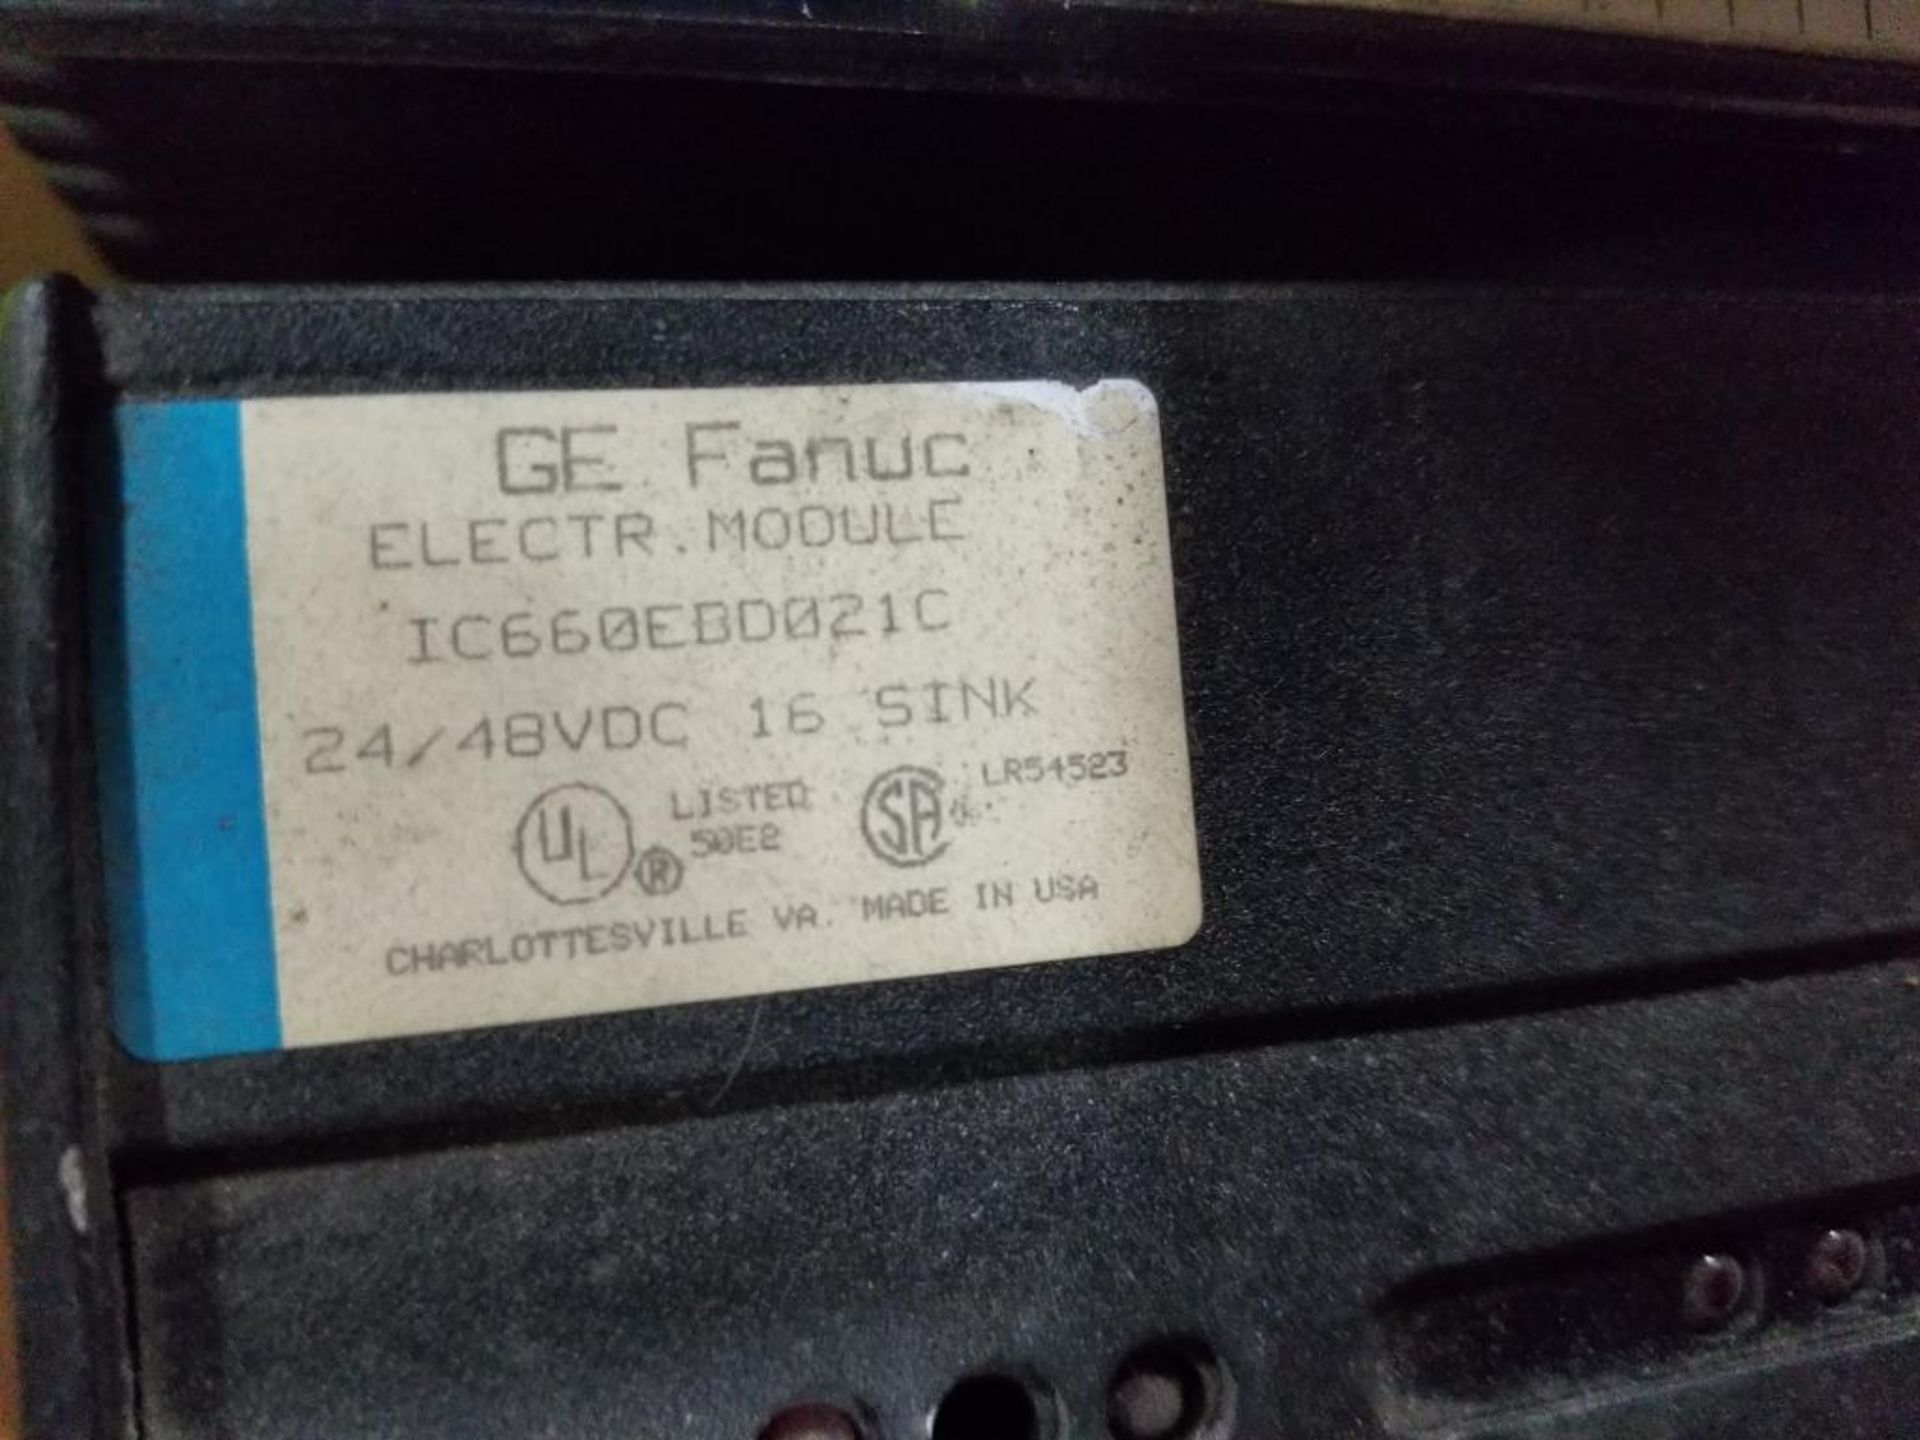 Qty 4 - GE Fanuc Genius 24/48 VDC Sink I/O module IC660EBD021C. - Image 5 of 8